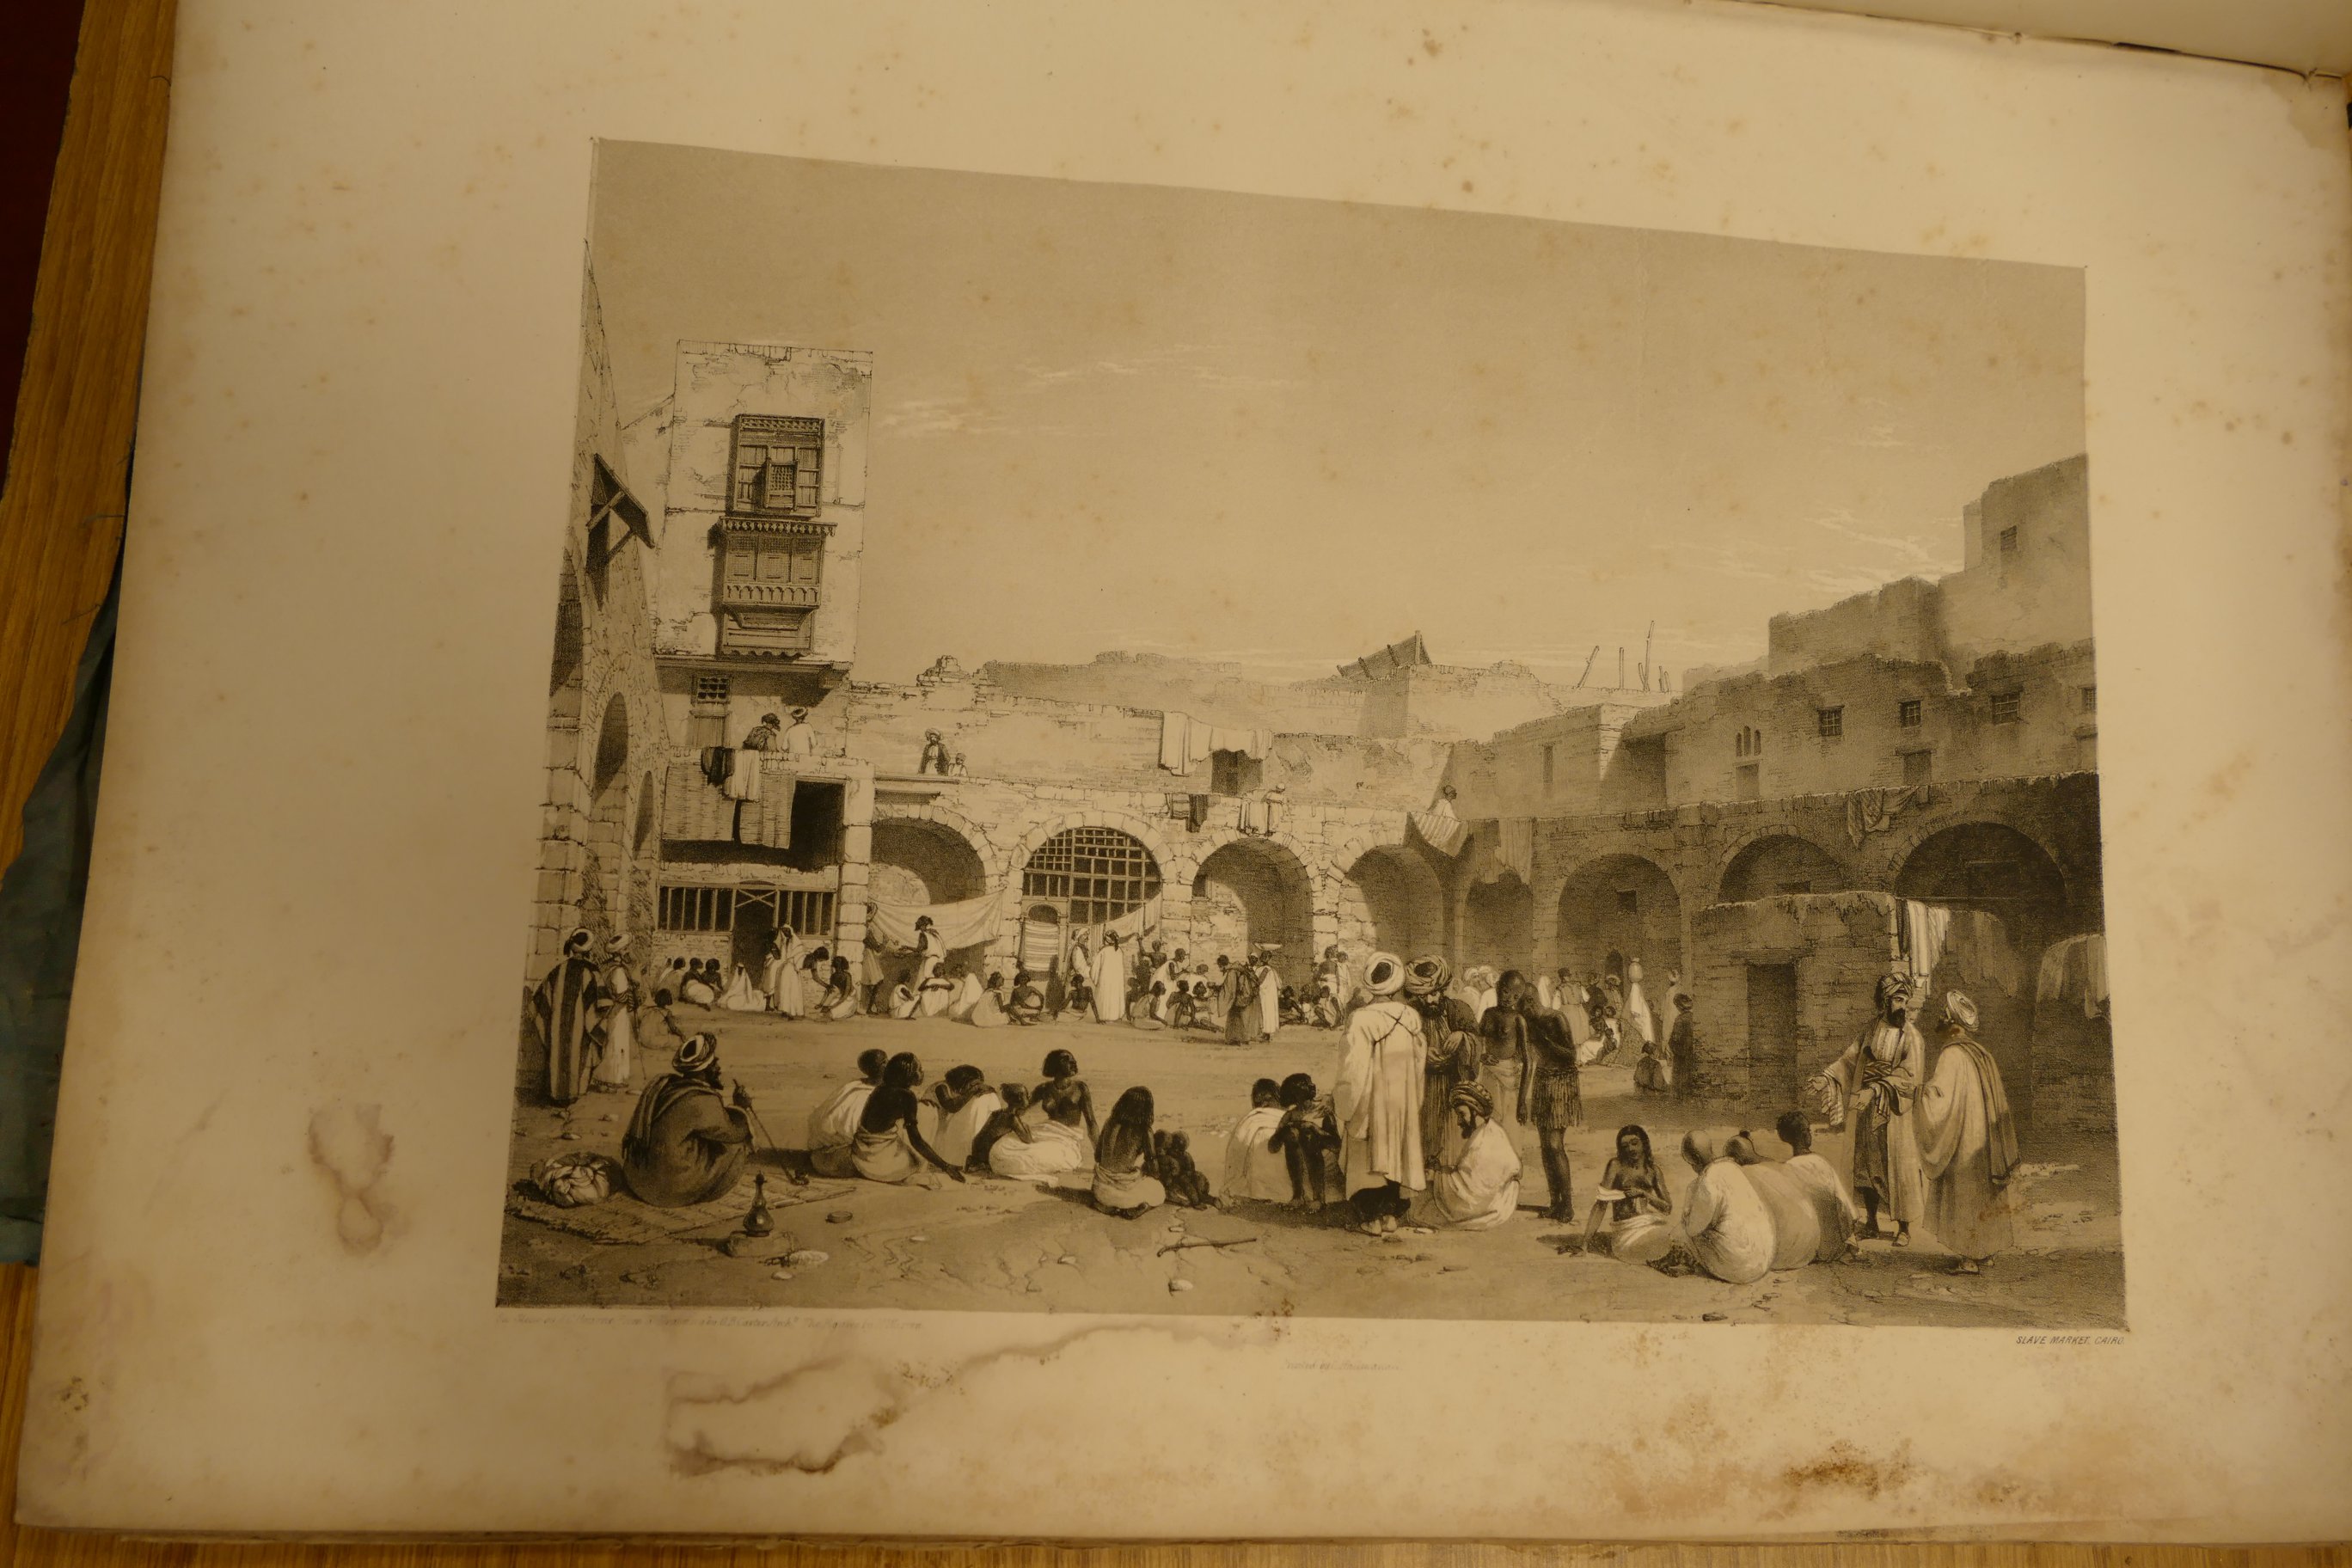 HAY, Robert, Illustrations of Cairo, London 1840, folio, very worn half calf, shaken, - Image 17 of 20